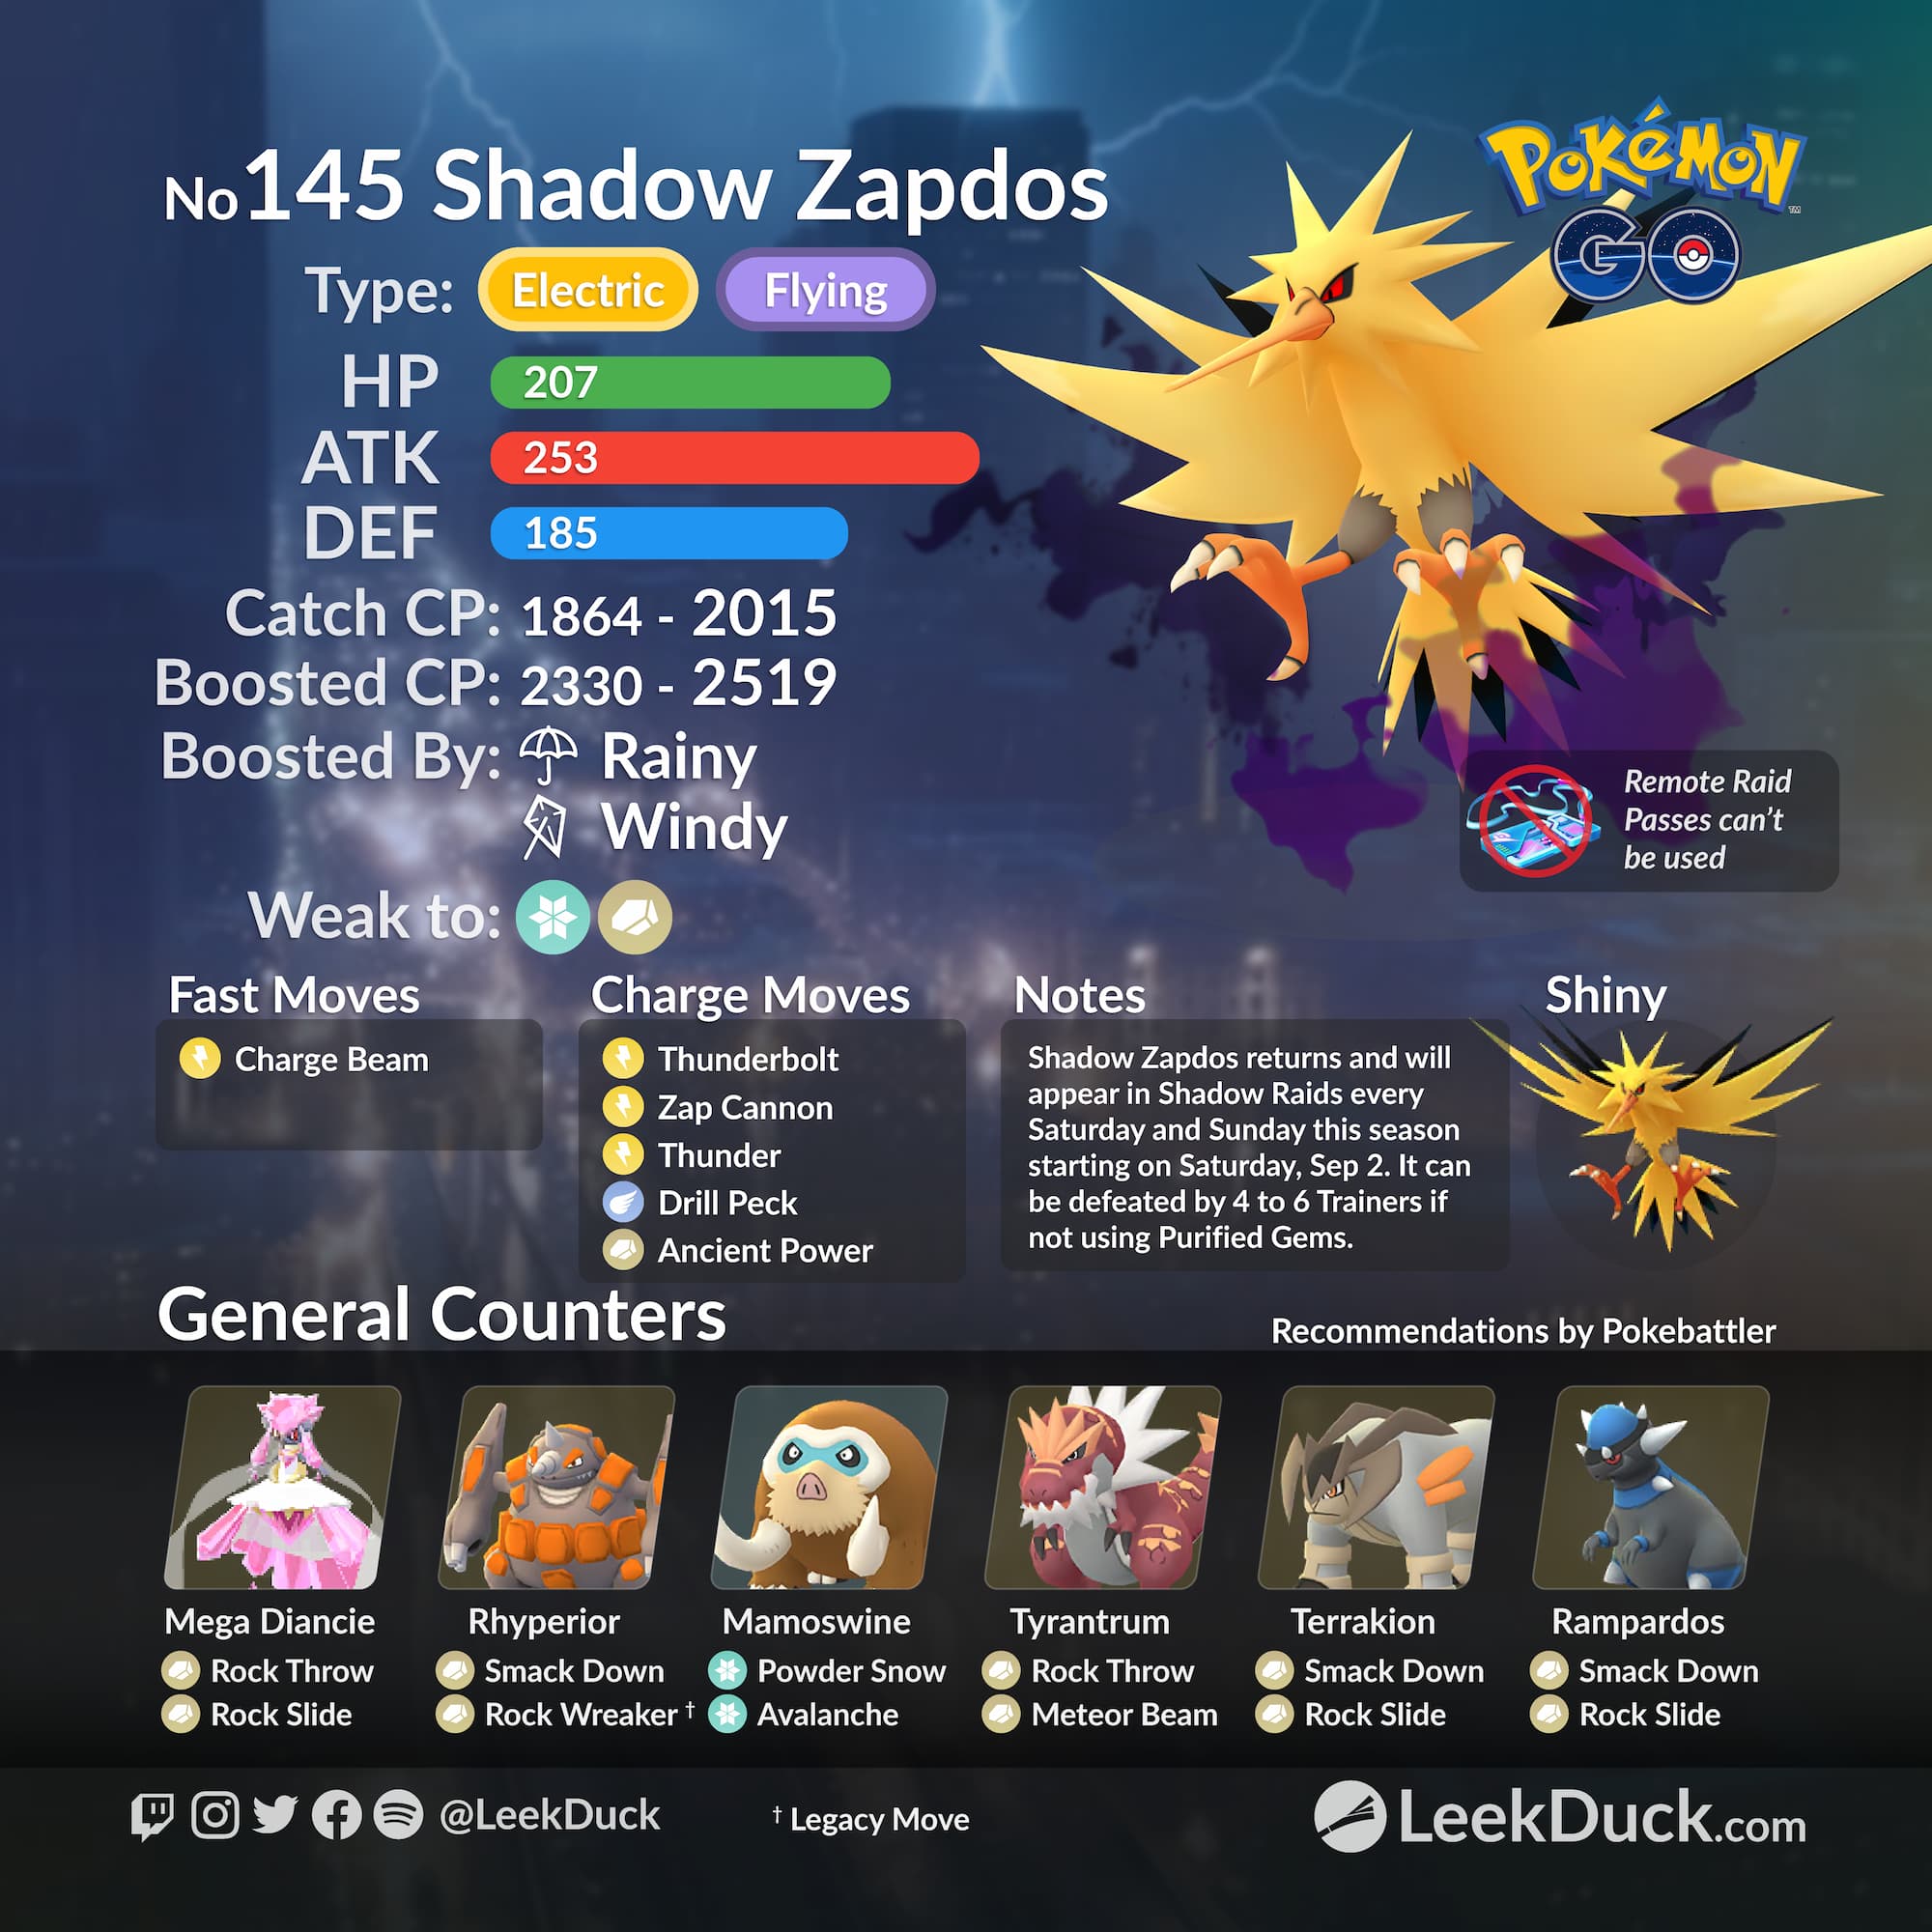 How to get shiny Shadow Zapdos in Pokemon GO